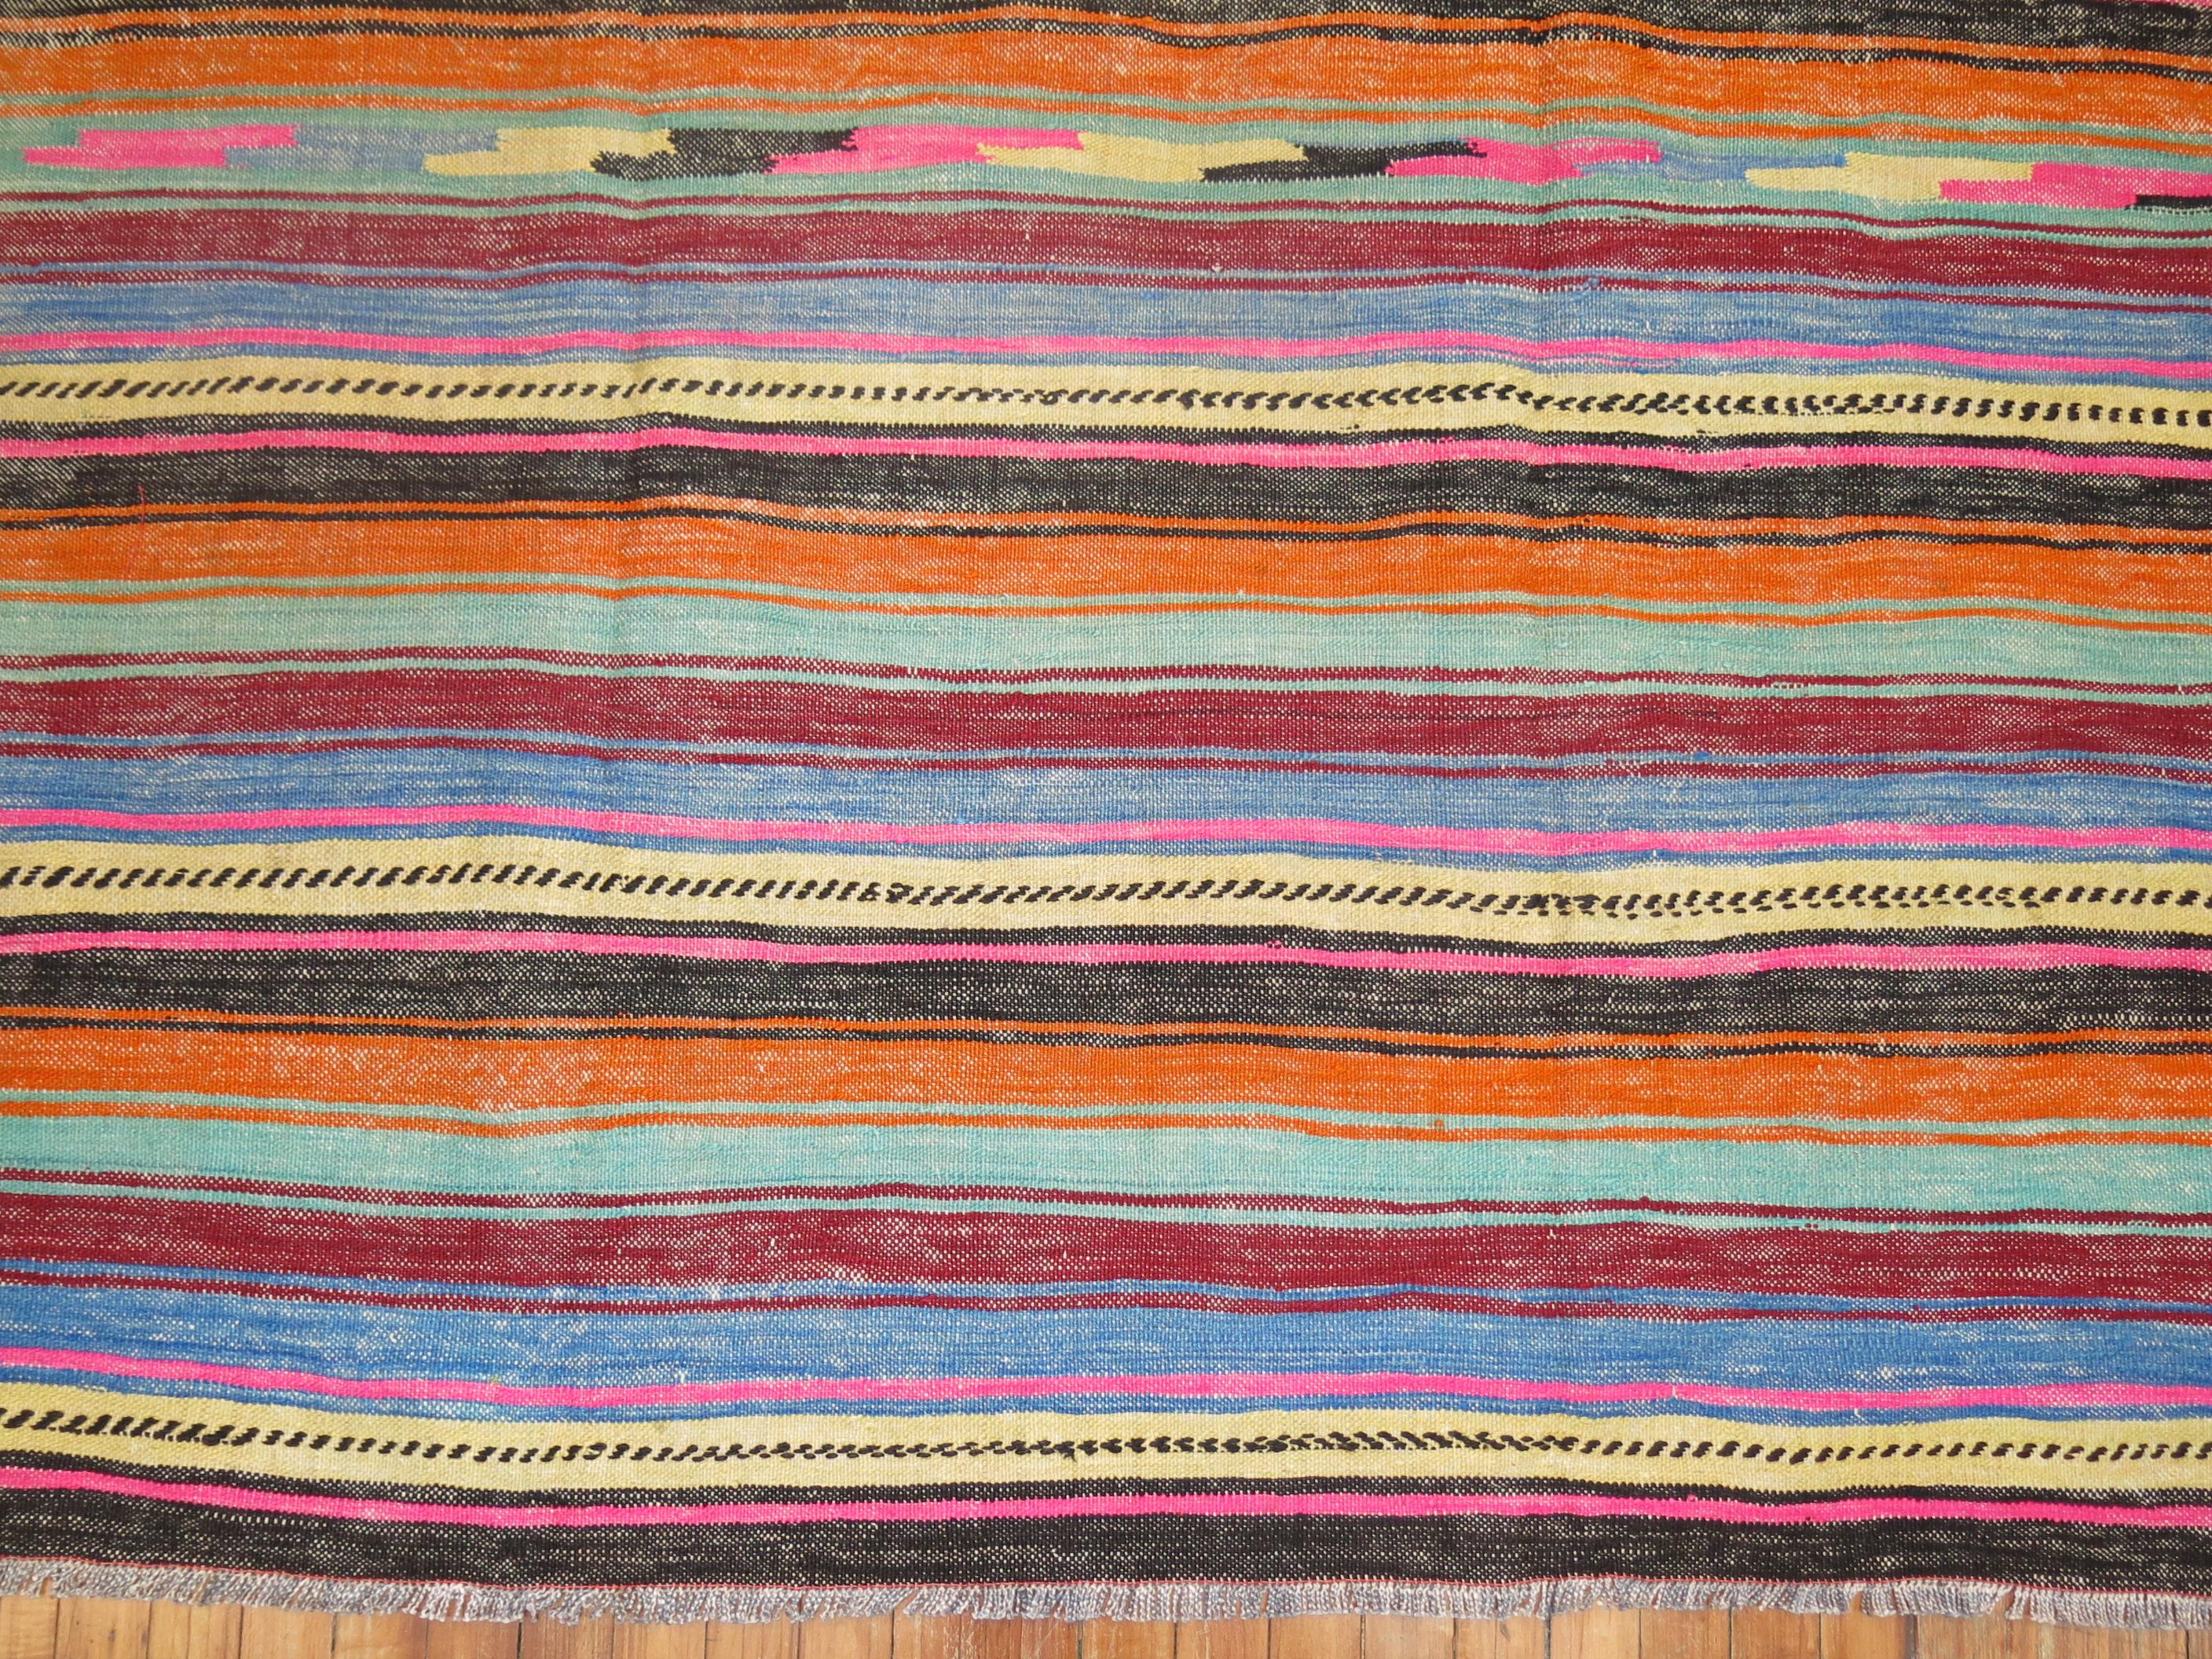 Mid-20th century striped Turkish kilim
rug no.	r4693
size	5' 6